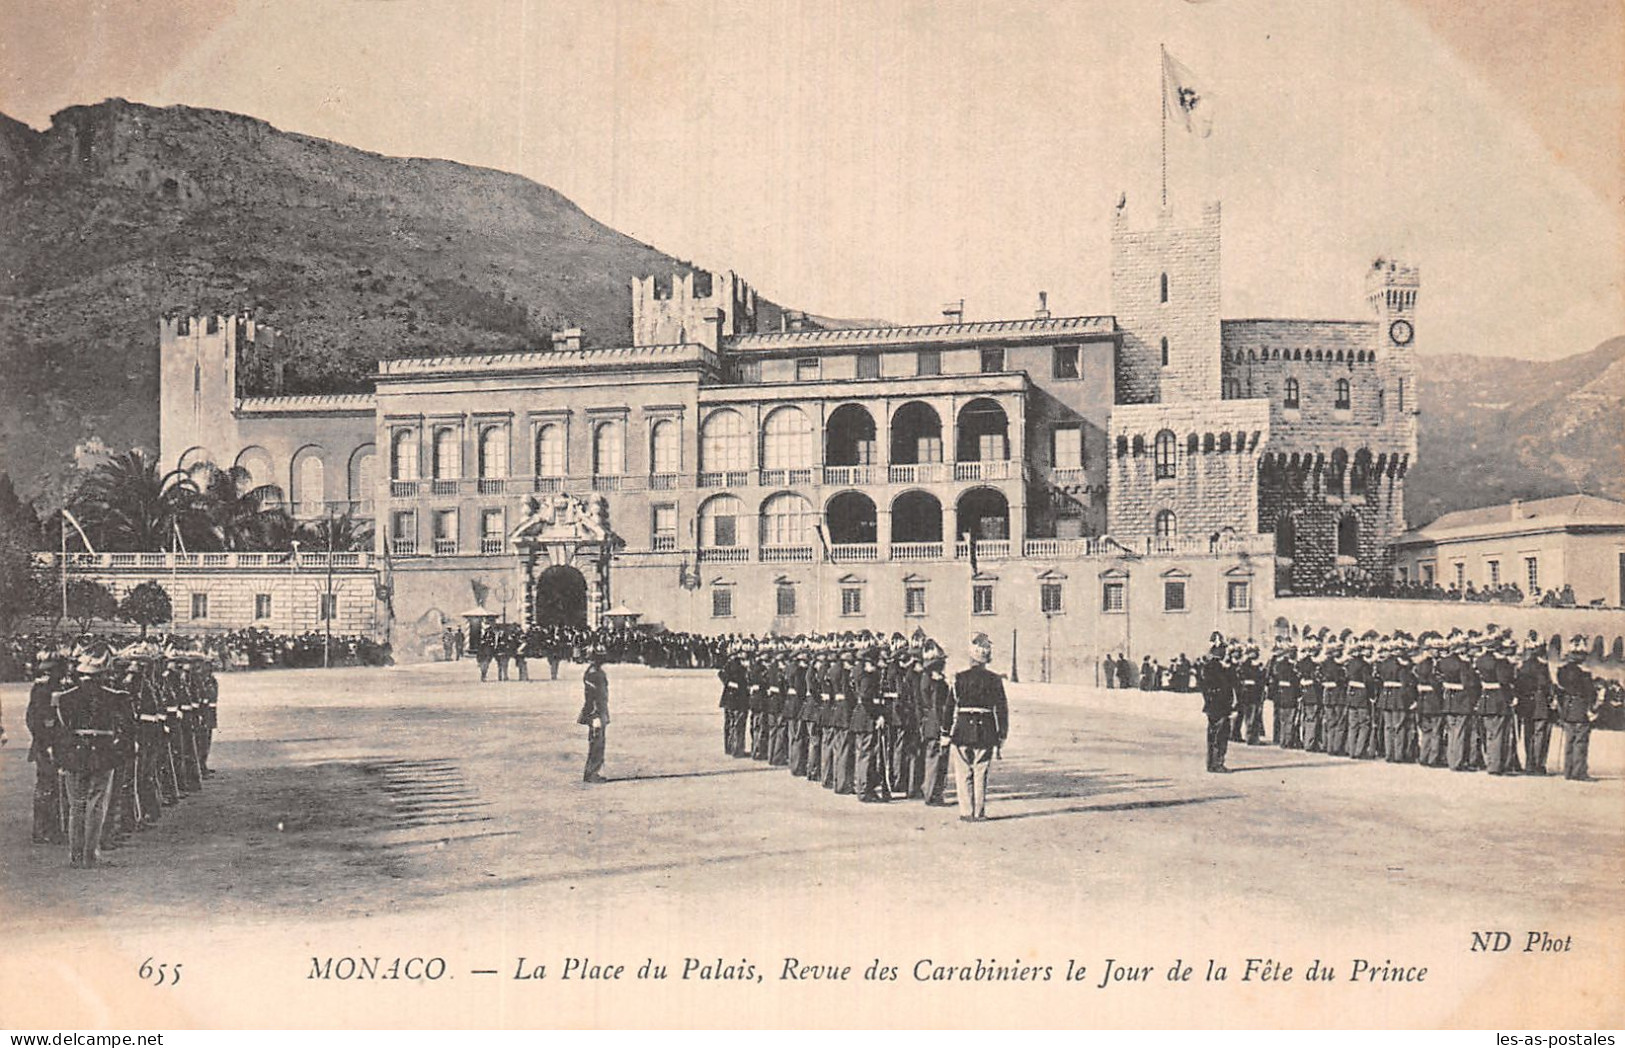 MONACO LE PALAIS CARABINIERS - Prince's Palace